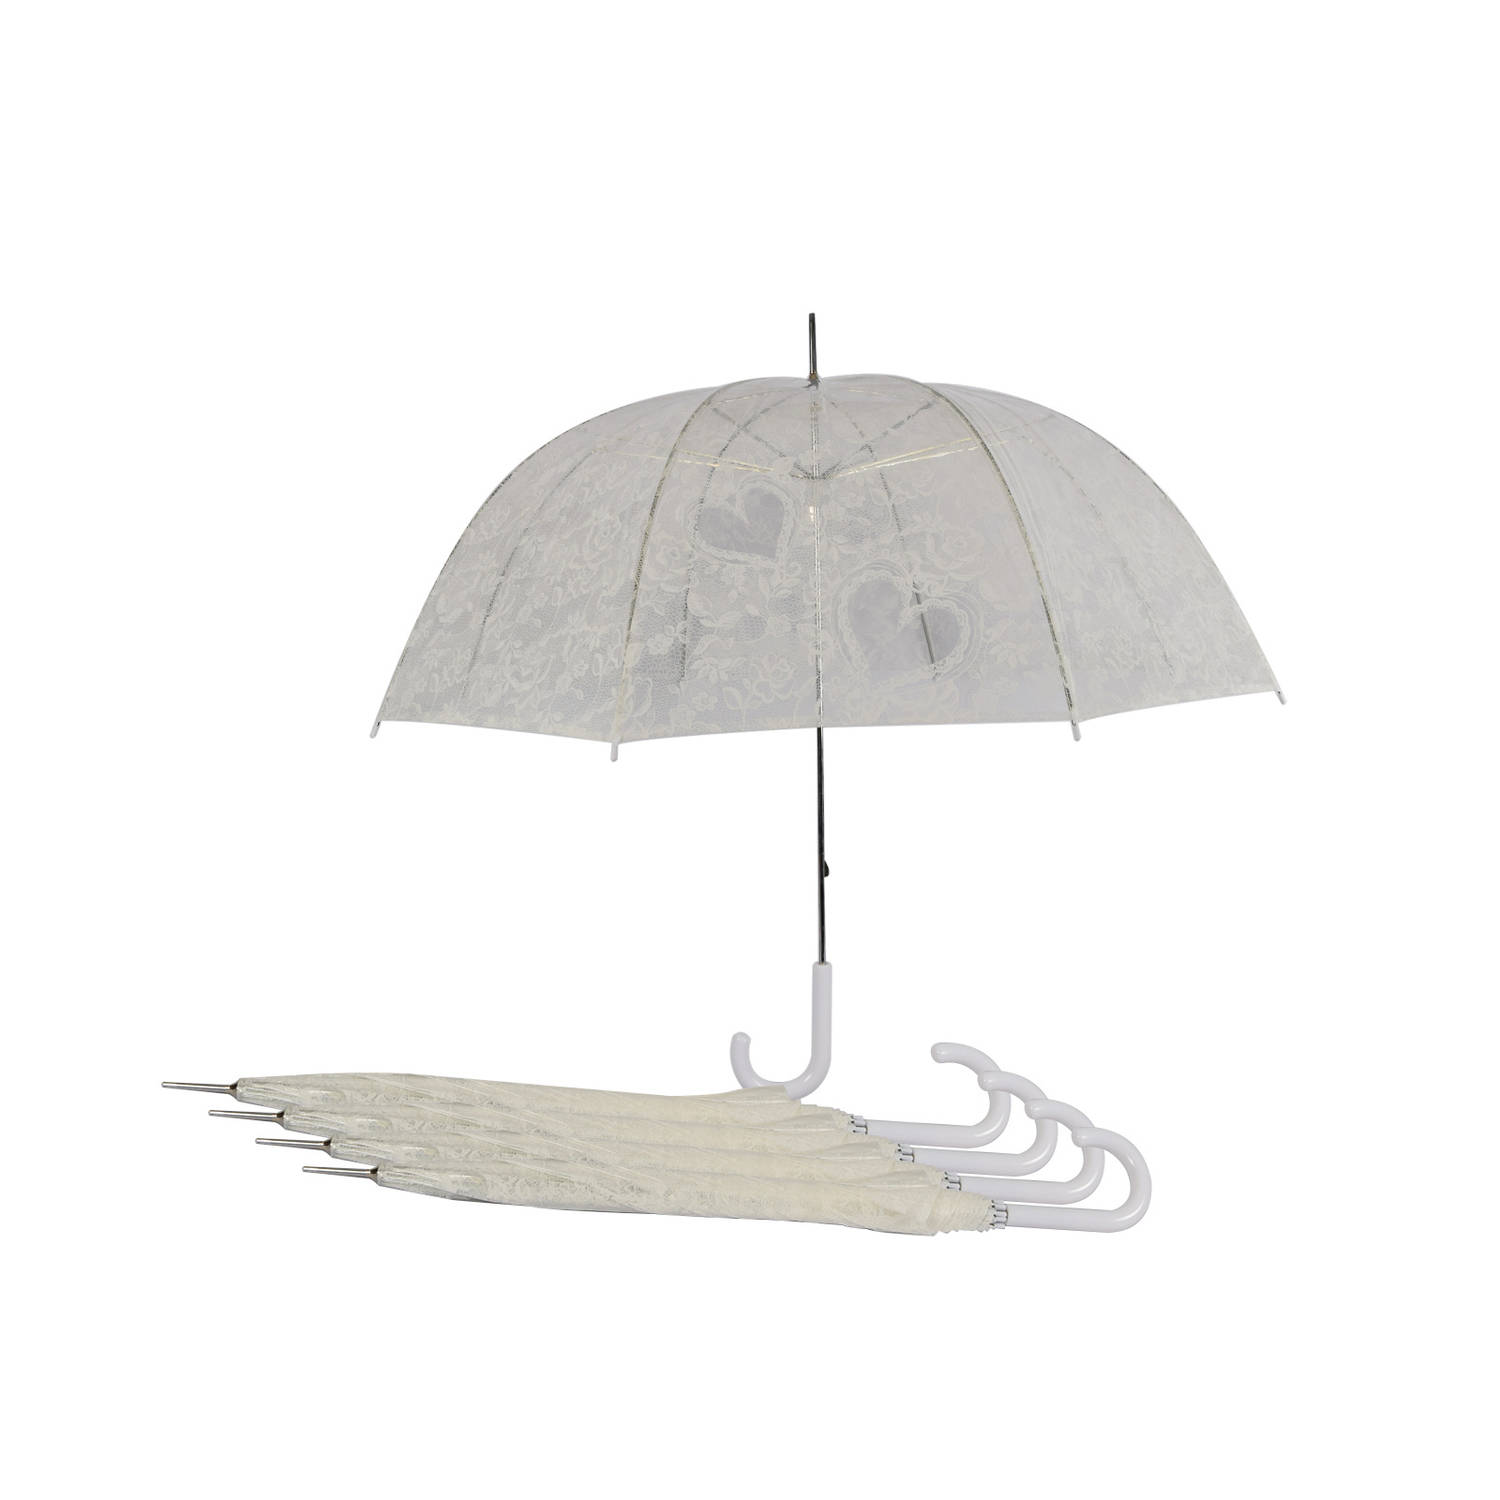 Set van 5 Elegante Trouwparaplu's - Transparante Paraplu met Hartjes | Windproof Bruidsparaplu | 95cm Diameter